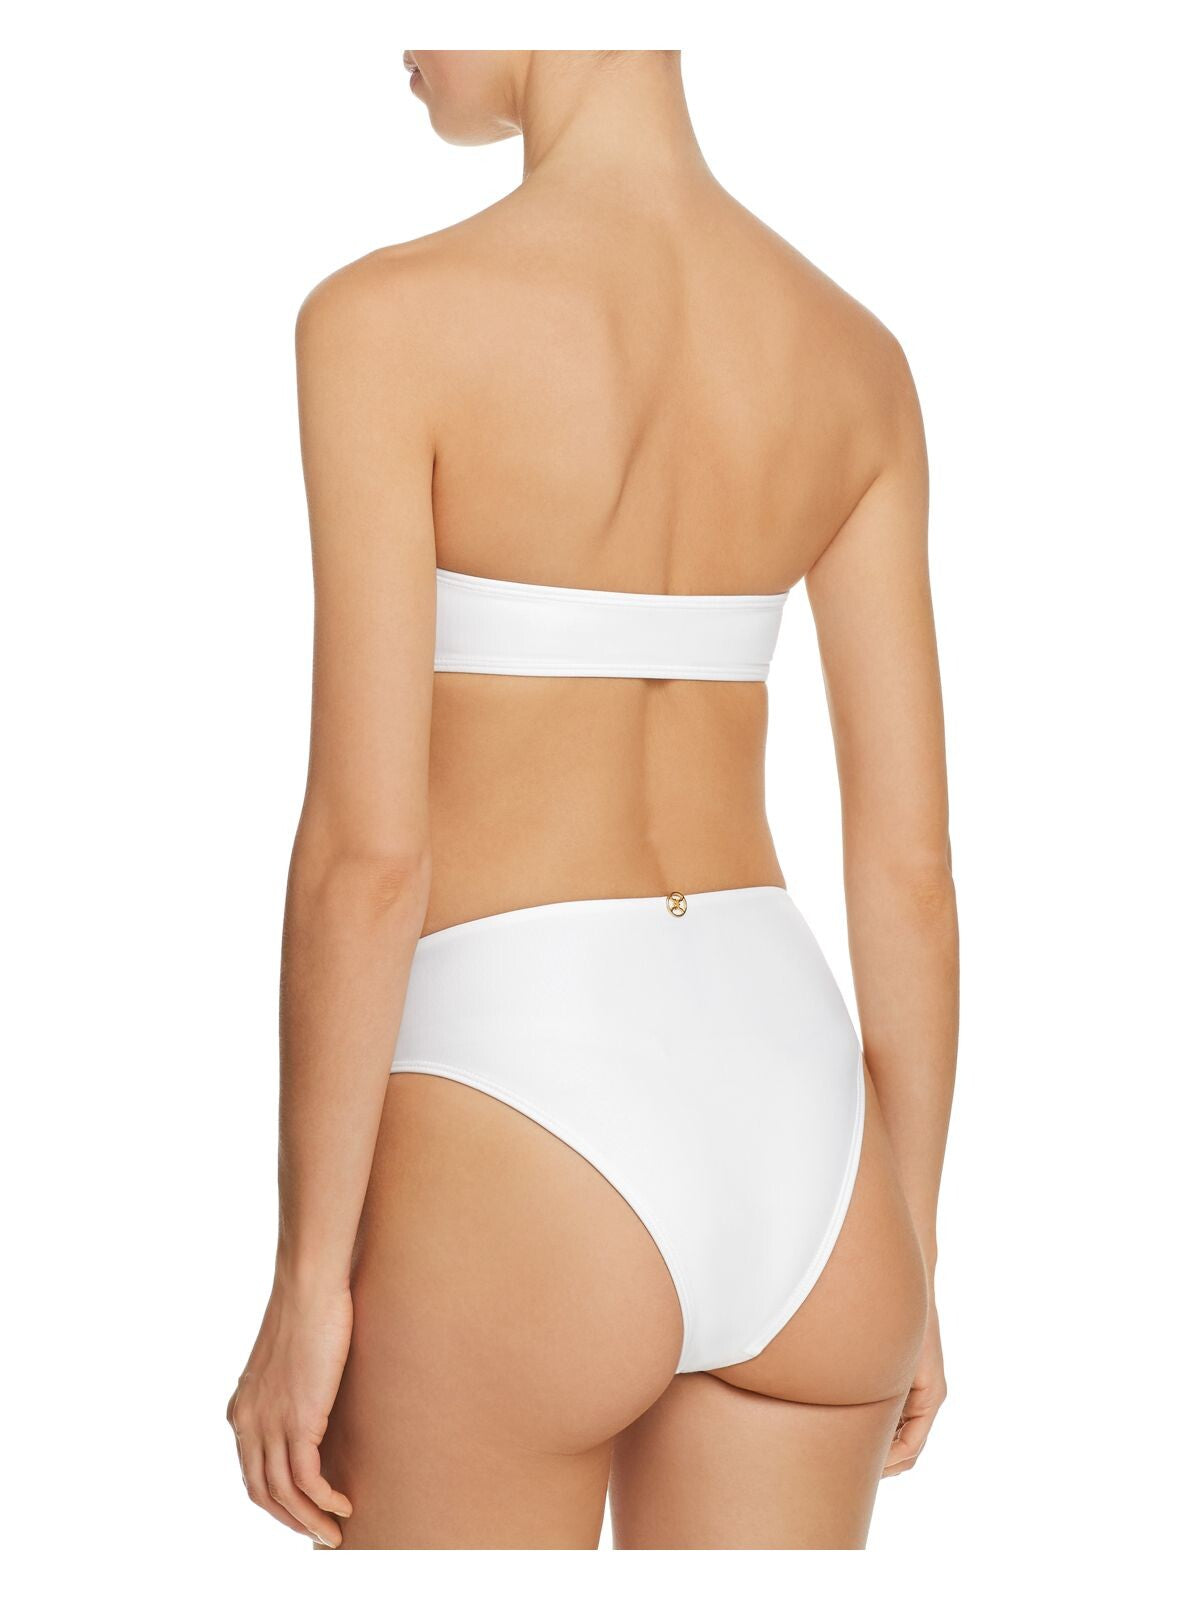 VIX PAULA HERMANNY Women's White Printed High Waisted Bikini Bottom S